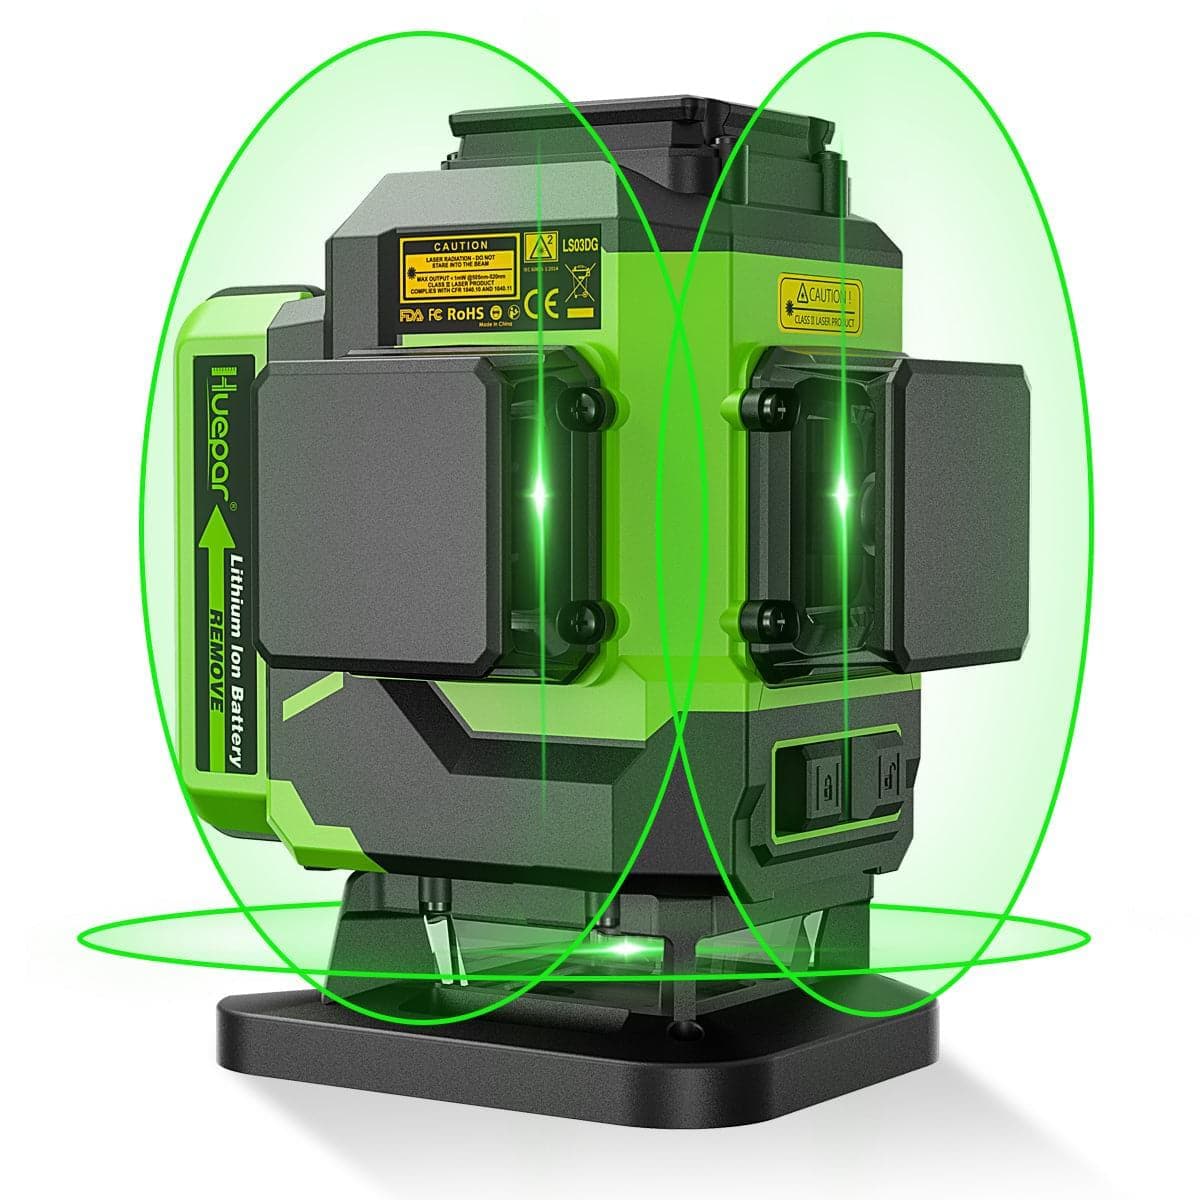 Huepar 603CG-H - 3D Green Beam Self-Leveling 3 X 360° Laser Level with